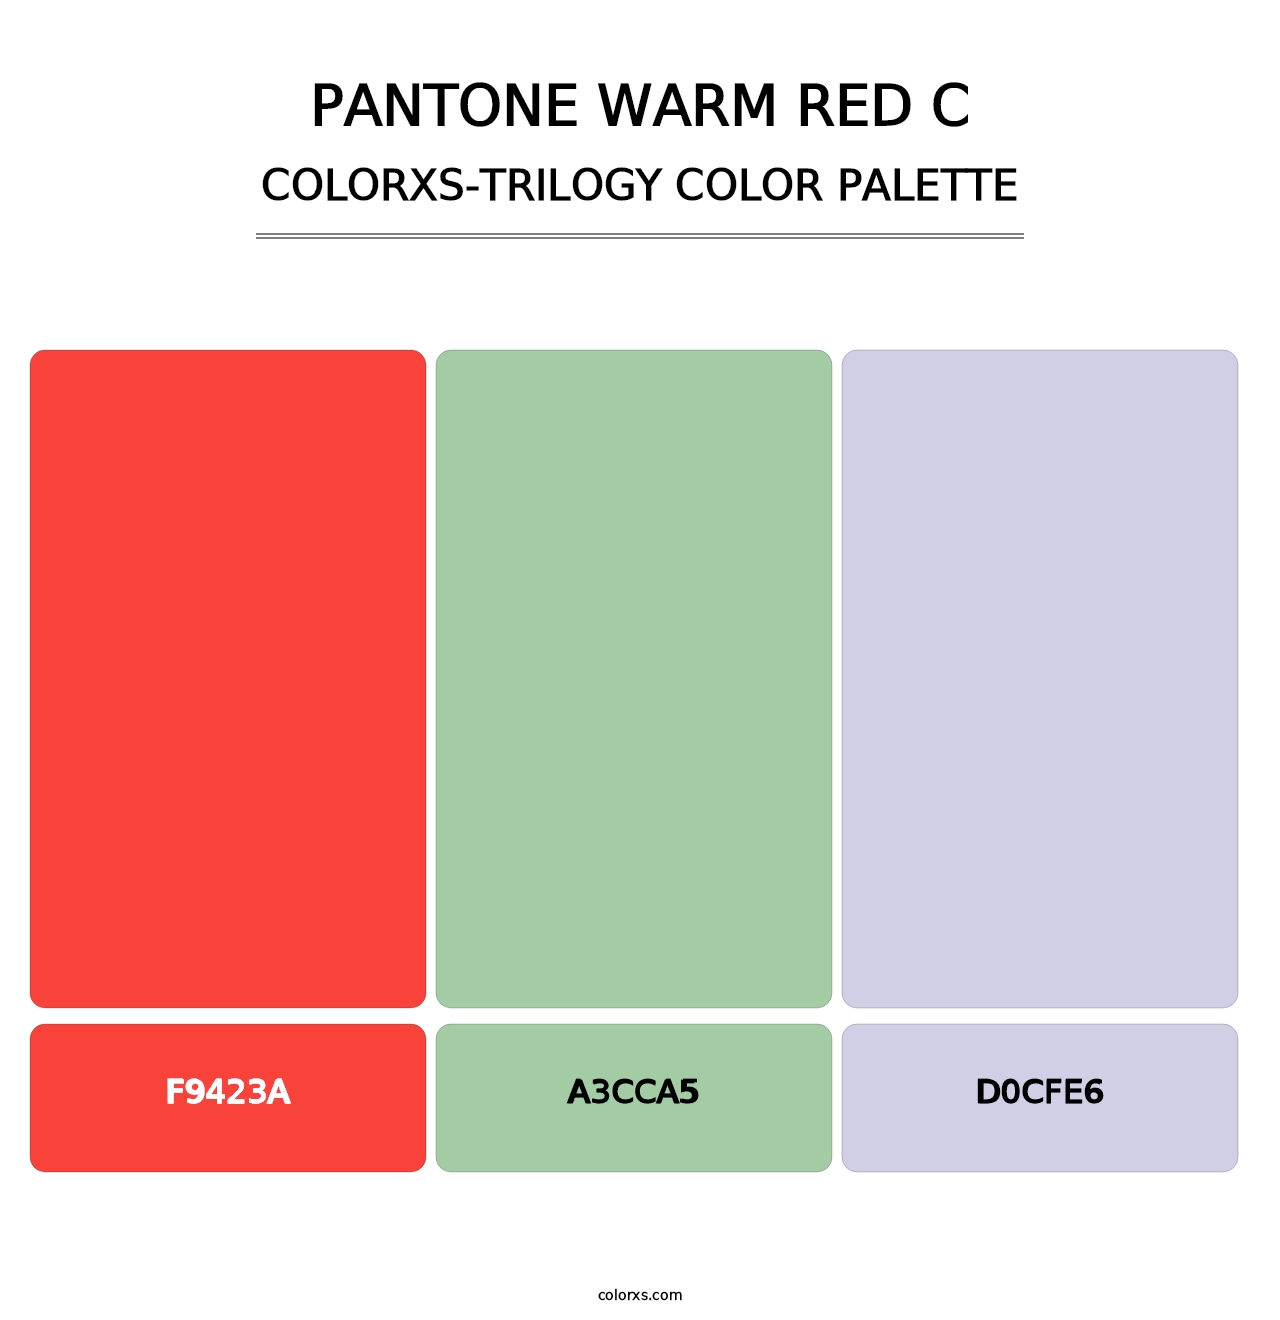 PANTONE Warm Red C - Colorxs Trilogy Palette